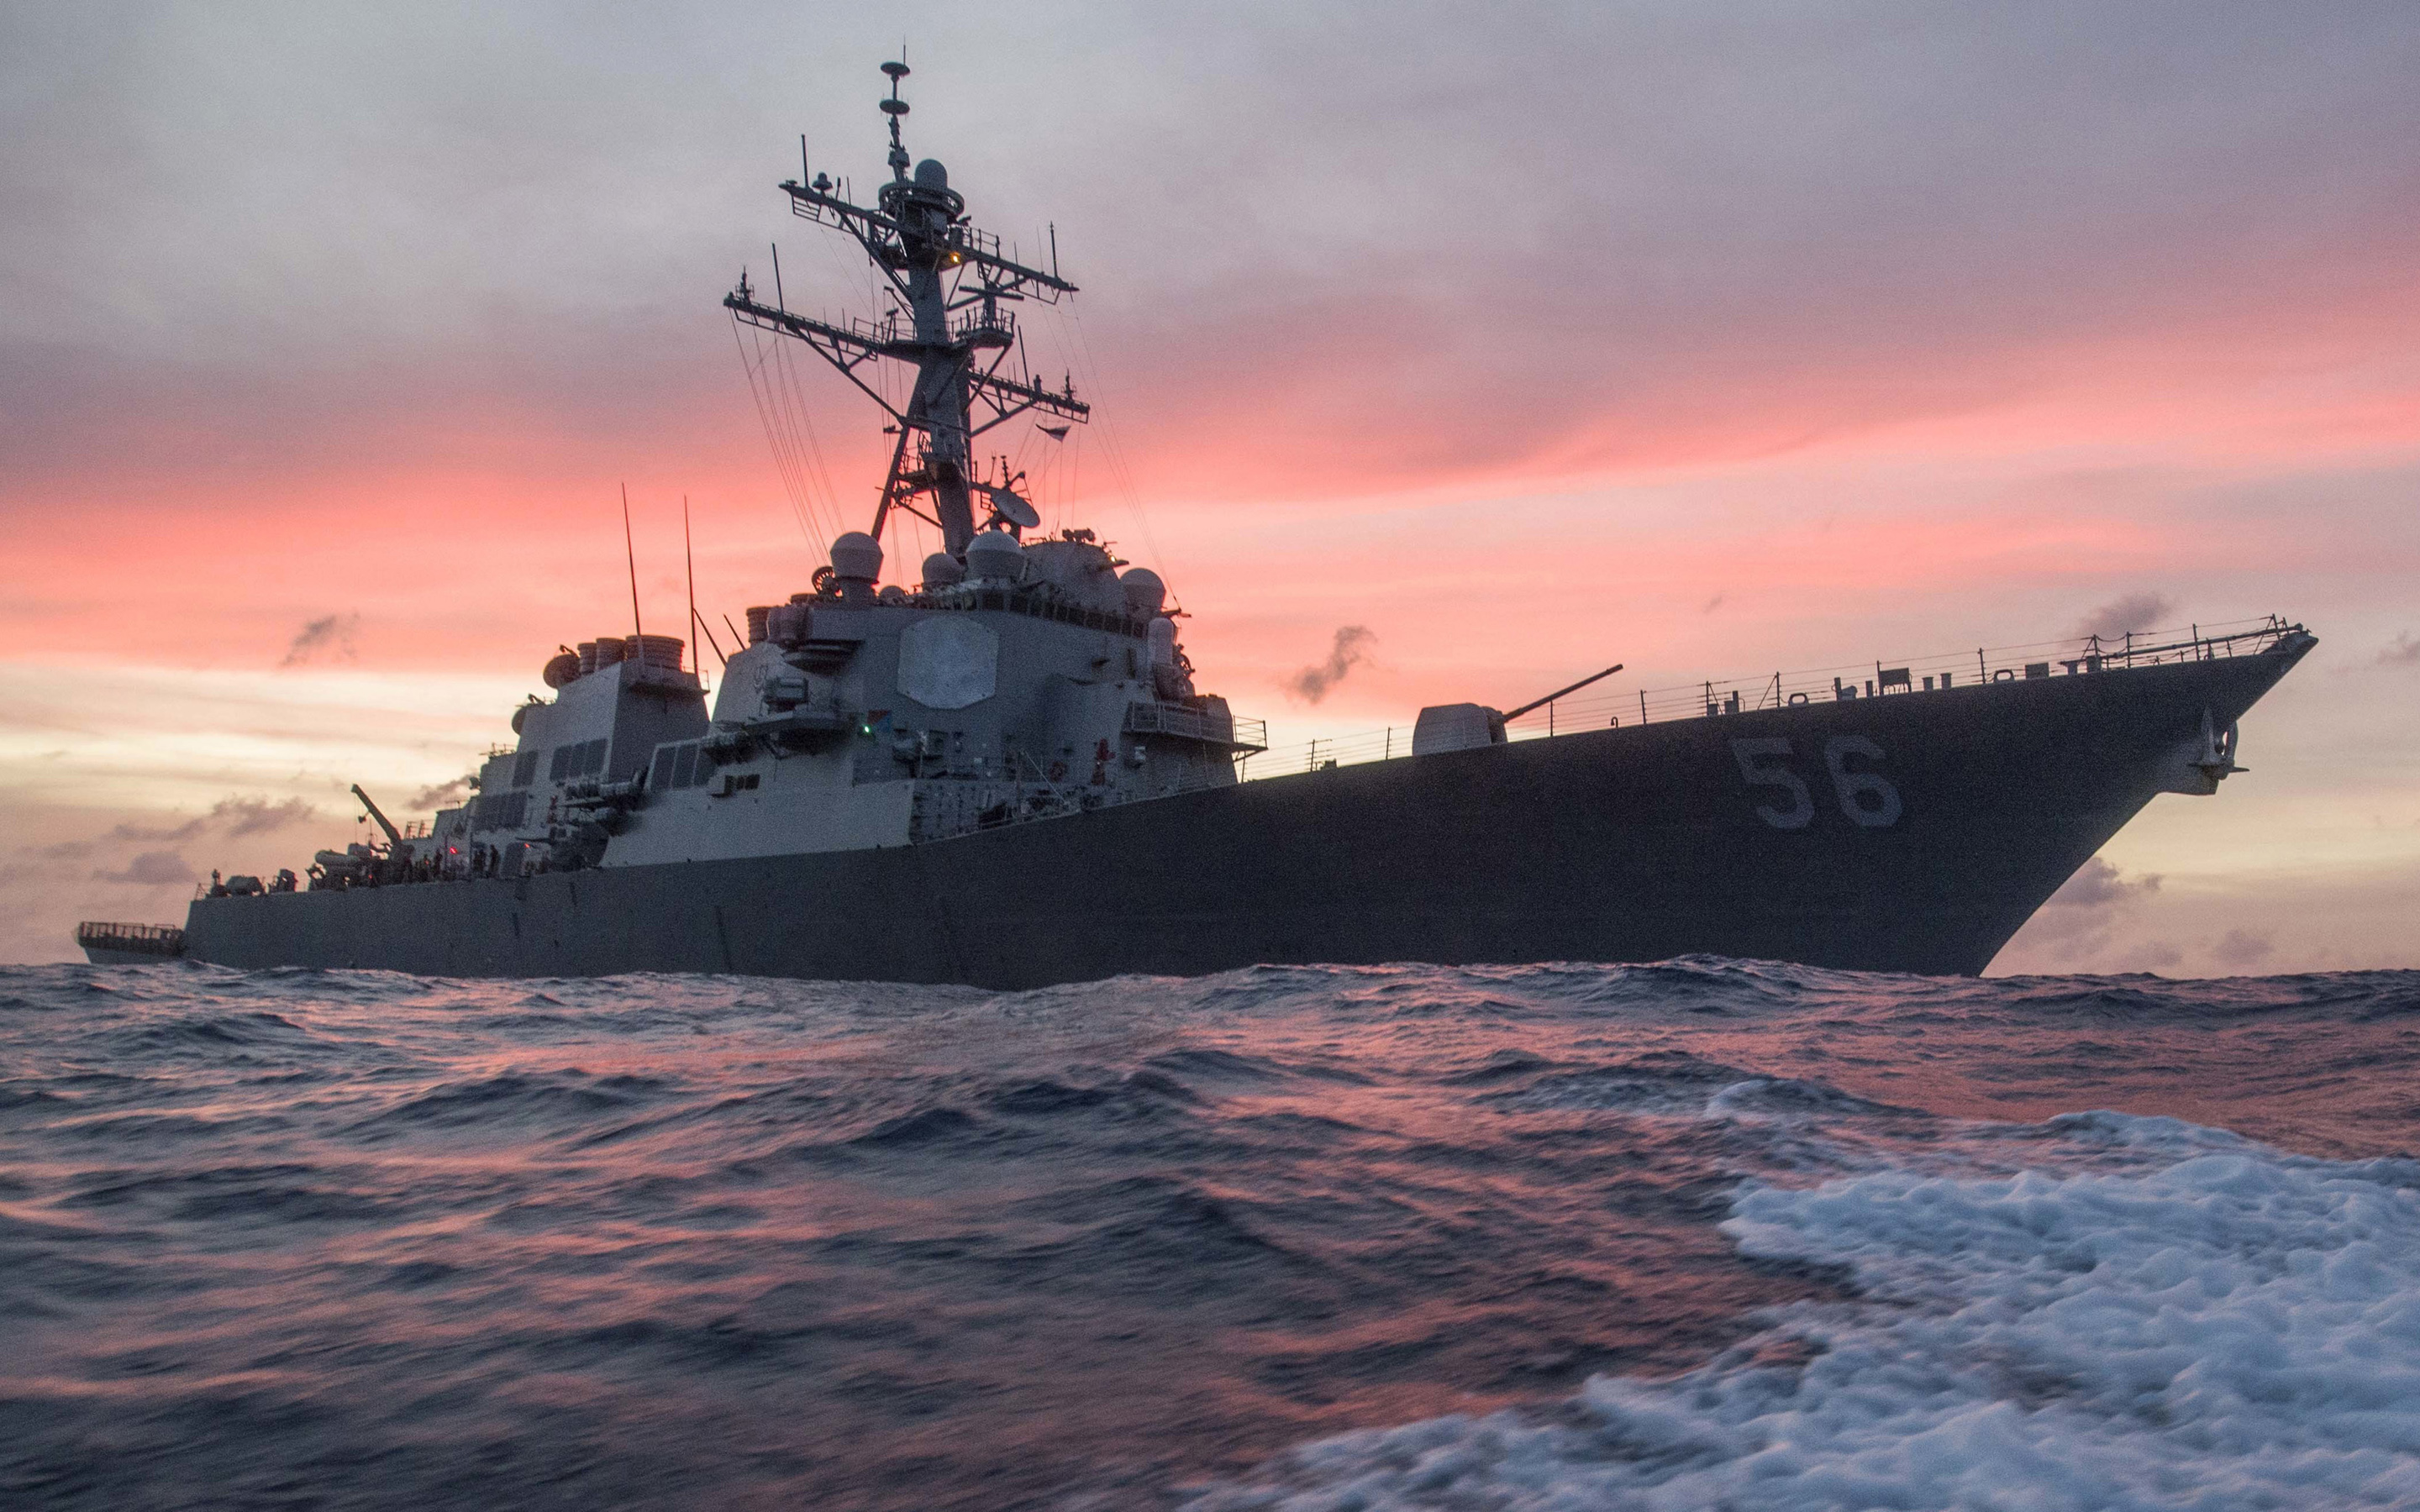 Download wallpaper USS John S McCain, destroyer ship, DDG- US